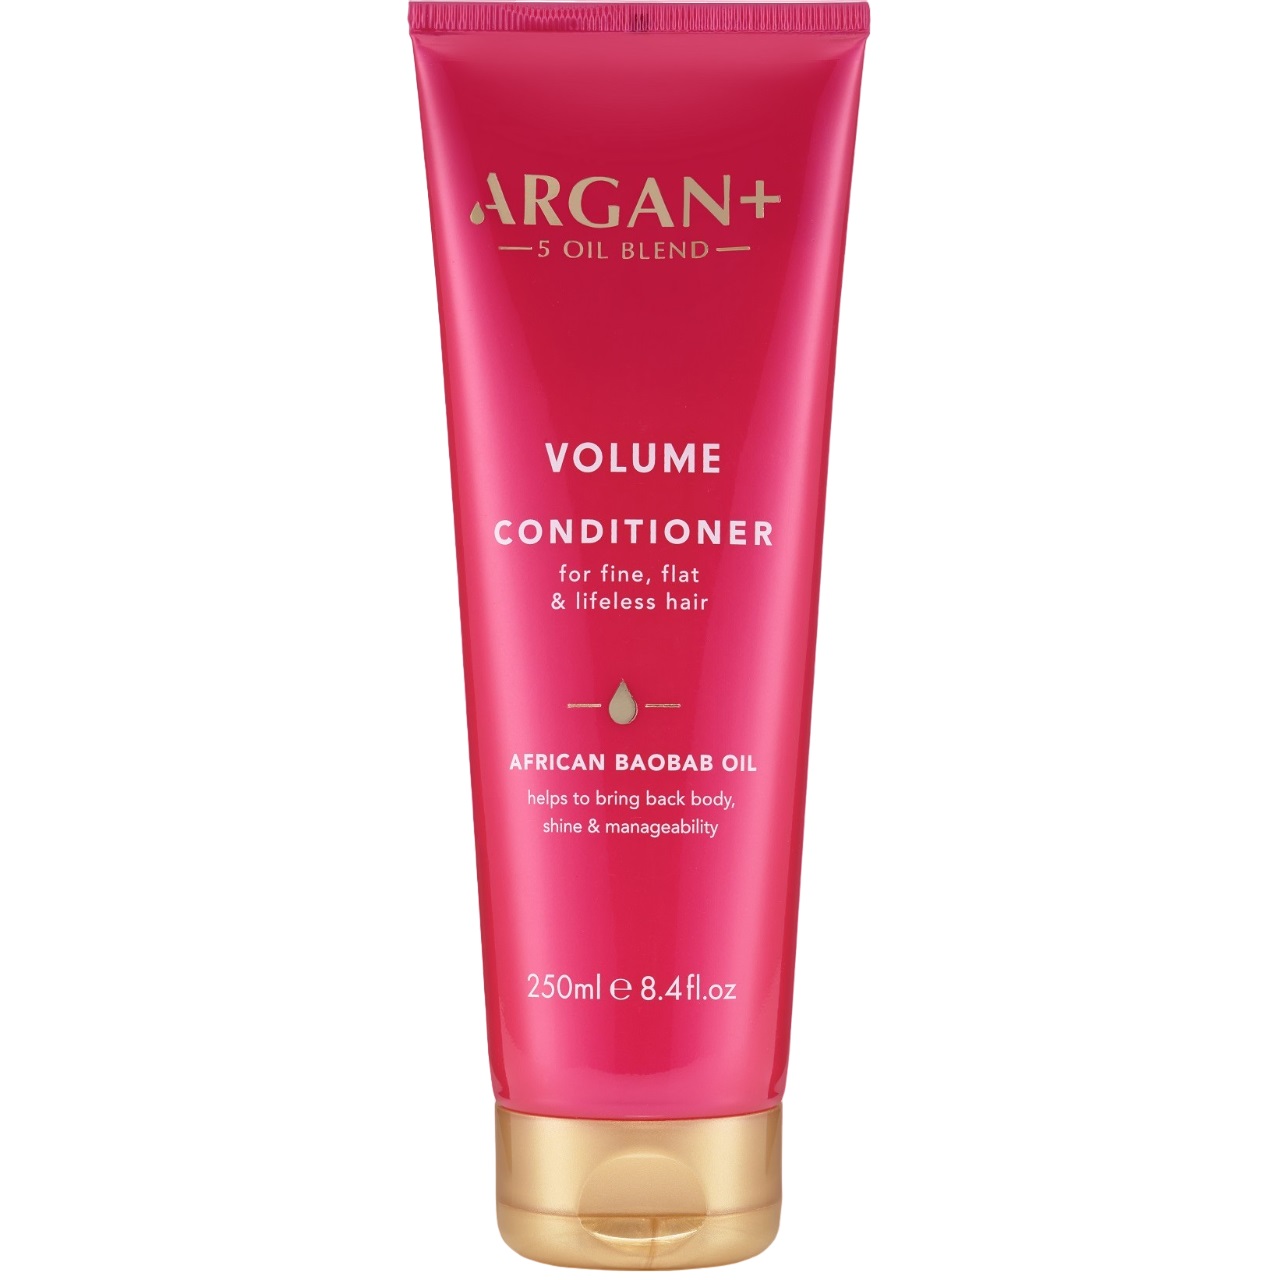 Кондиционер для волос Argan+ African Baobab Oil Volume, 250 мл - фото 1